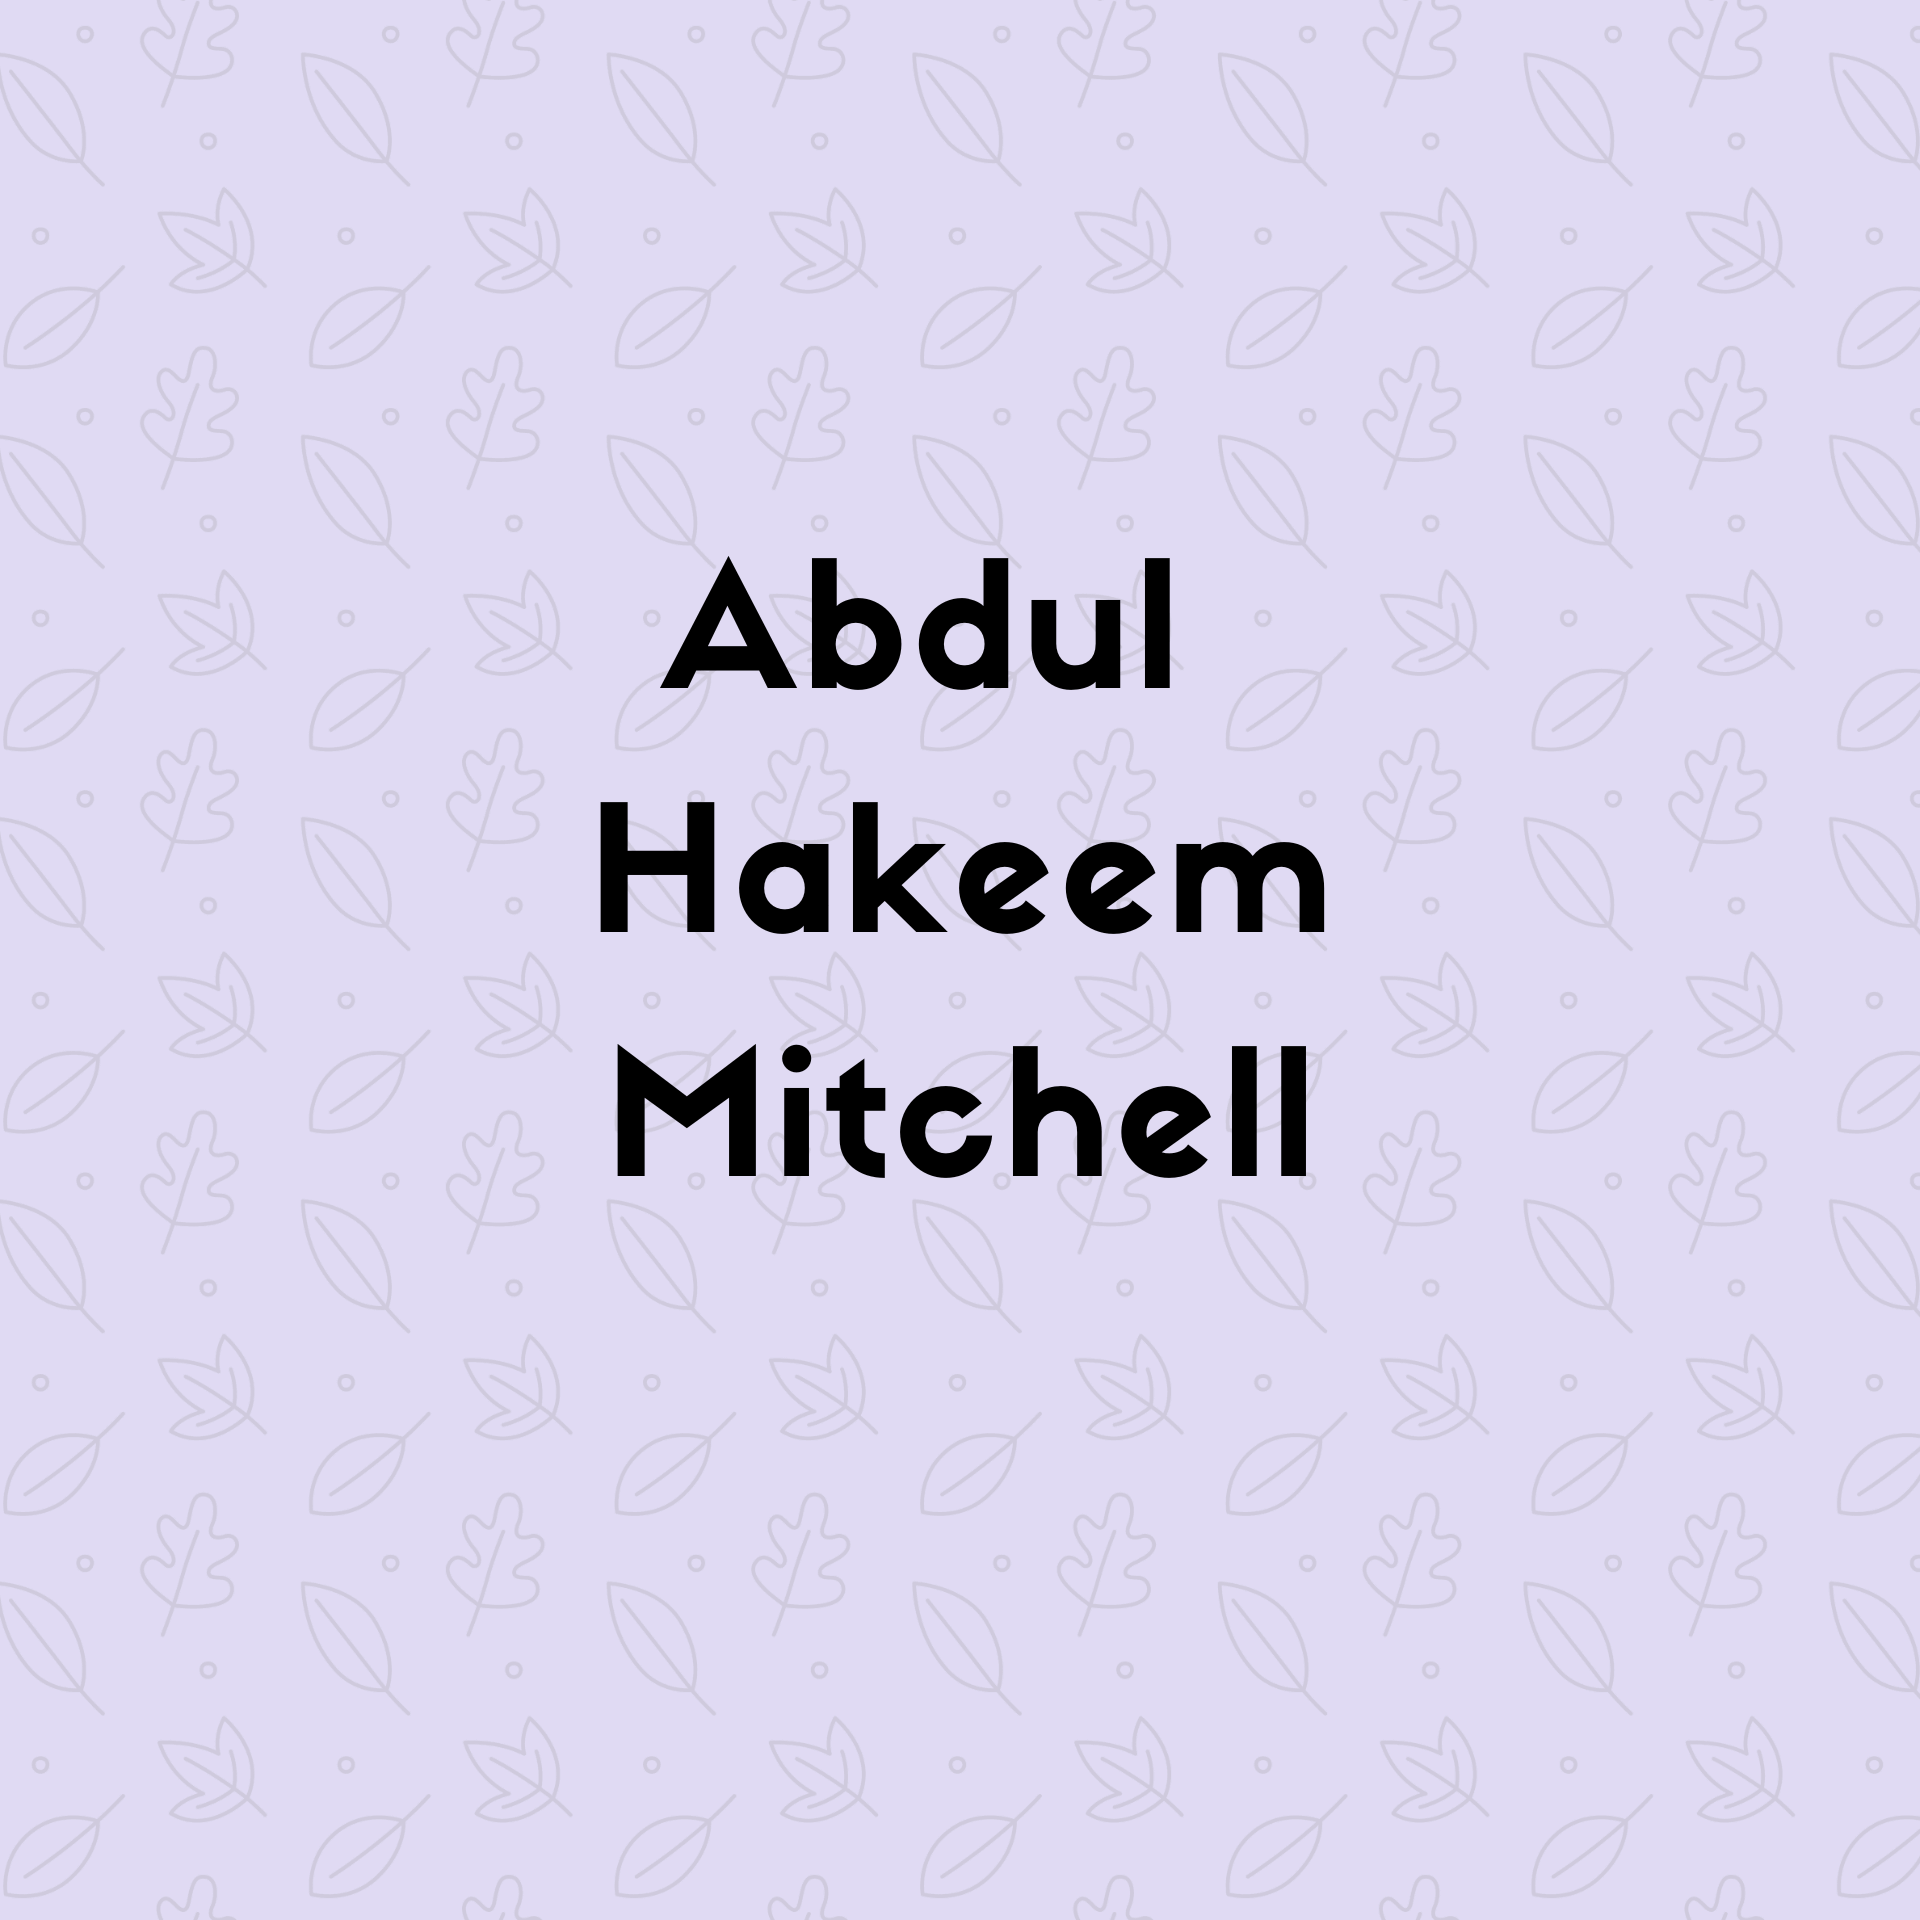  Abdul Hakeem Mitchell